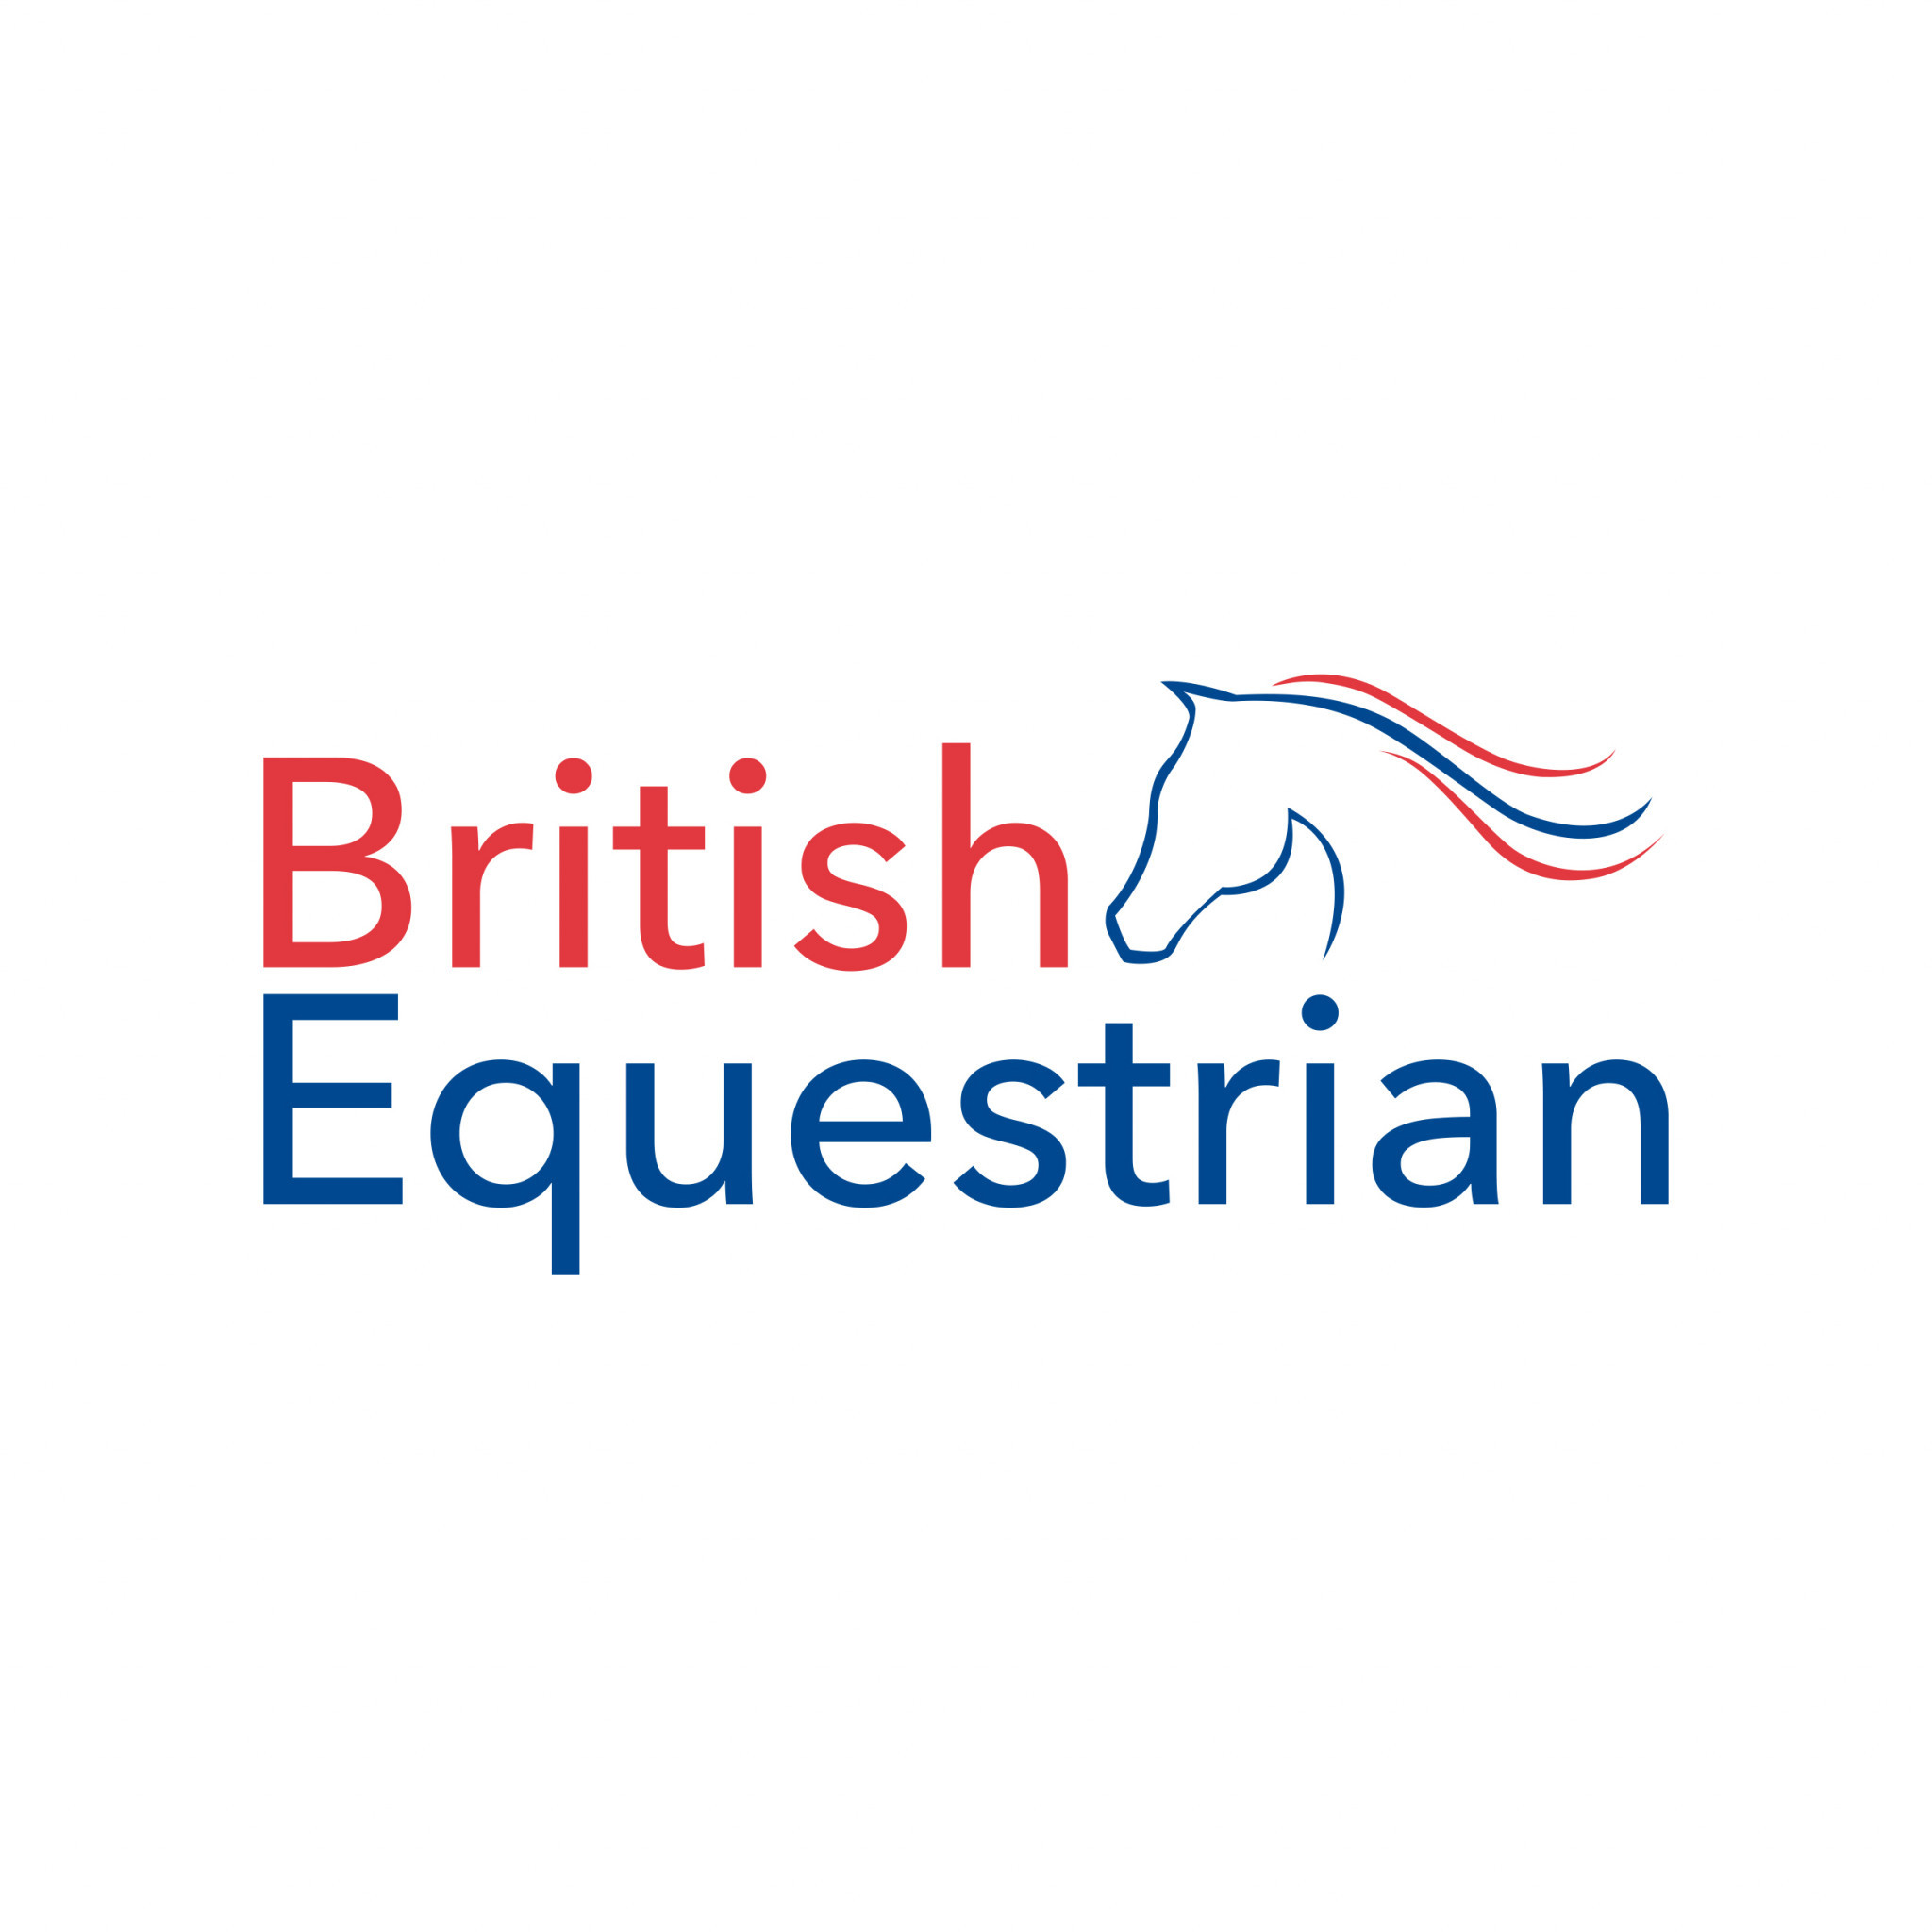 British Equestrian Federation undergoes rebranding